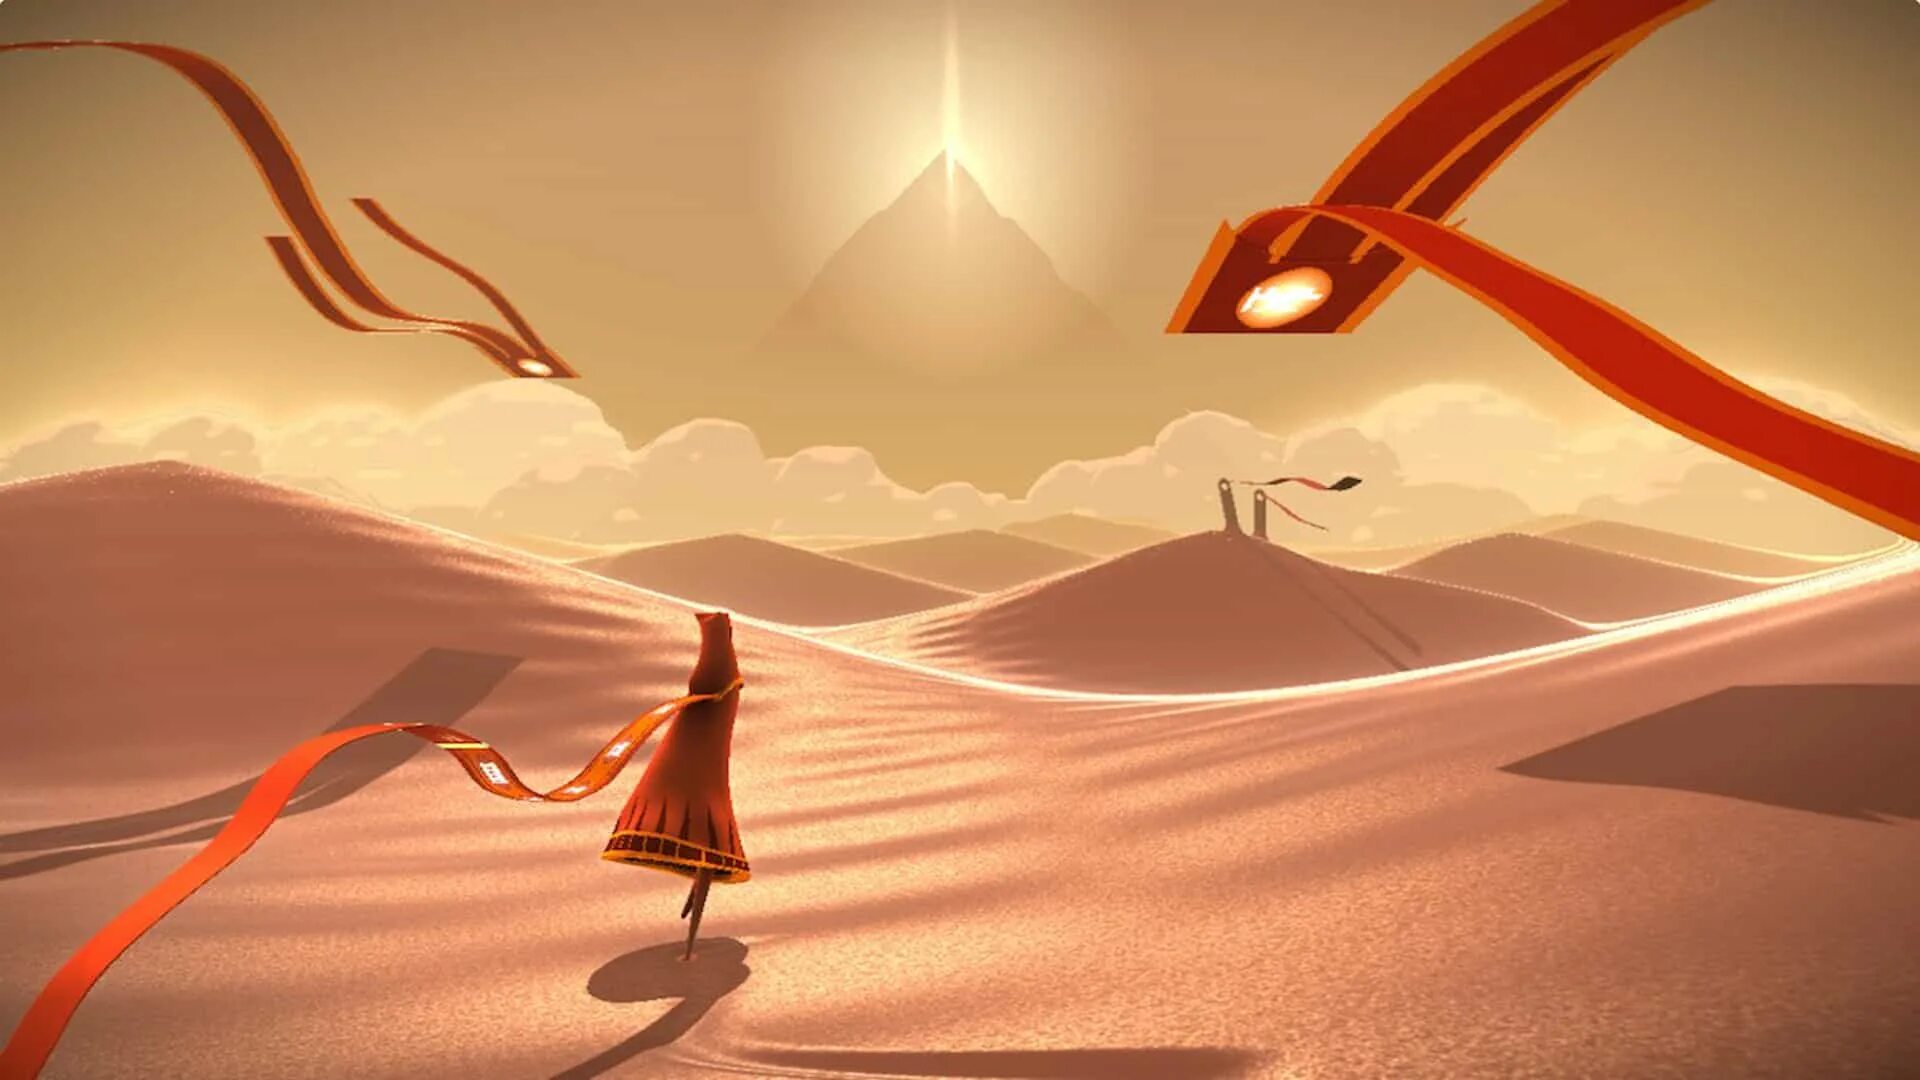 Journey включи. Journey игра thatgamecompany. Journey (игра, 2012). Джорни путешествие игра. Пустыня из игры Джорни.